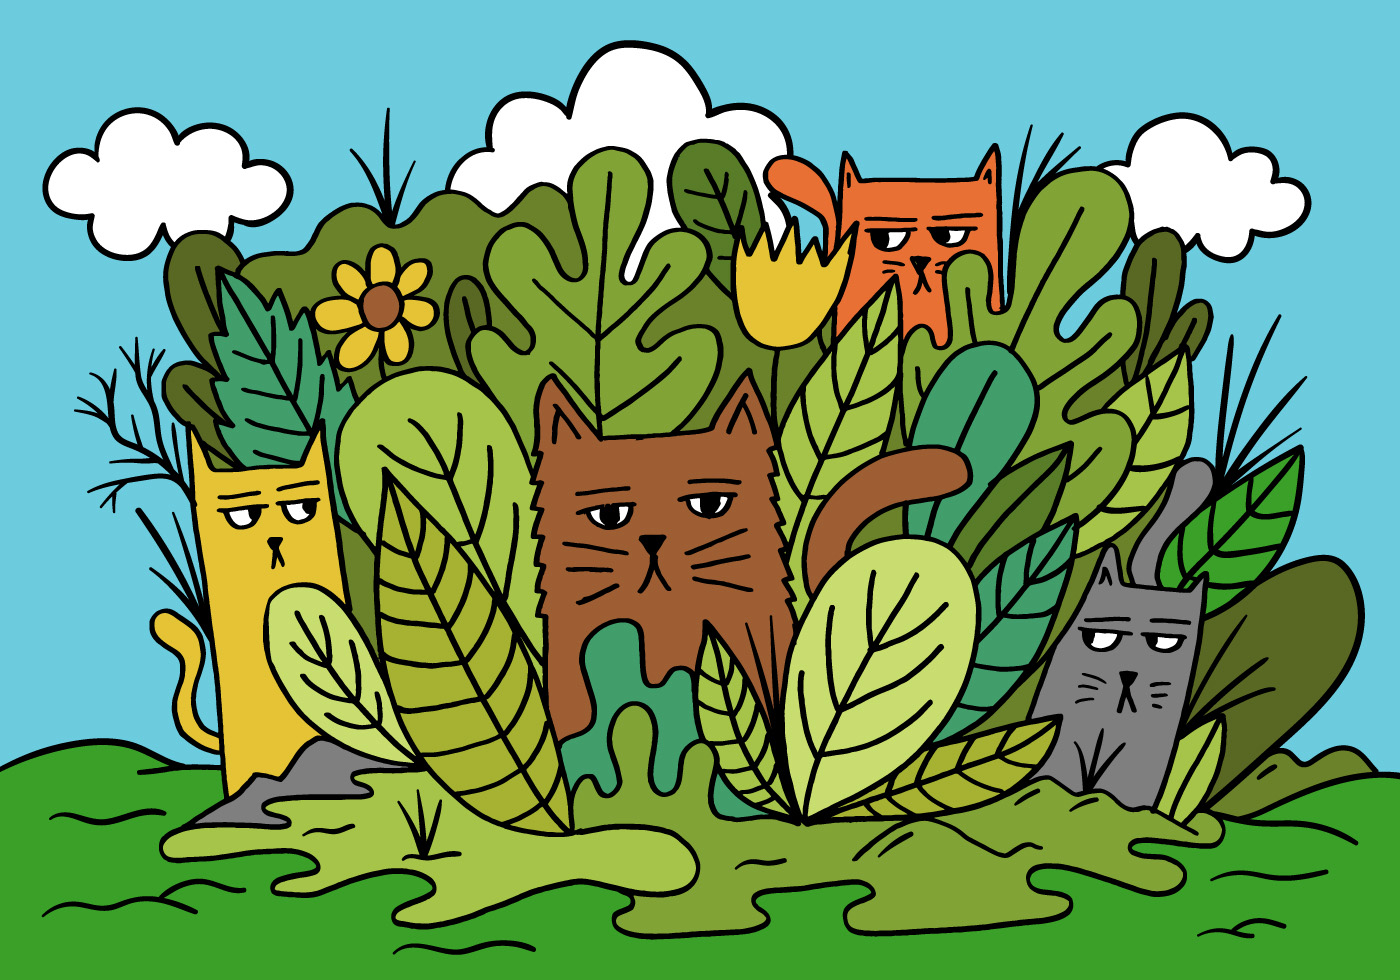 cats in a garden - Download Free Vectors, Clipart Graphics ...